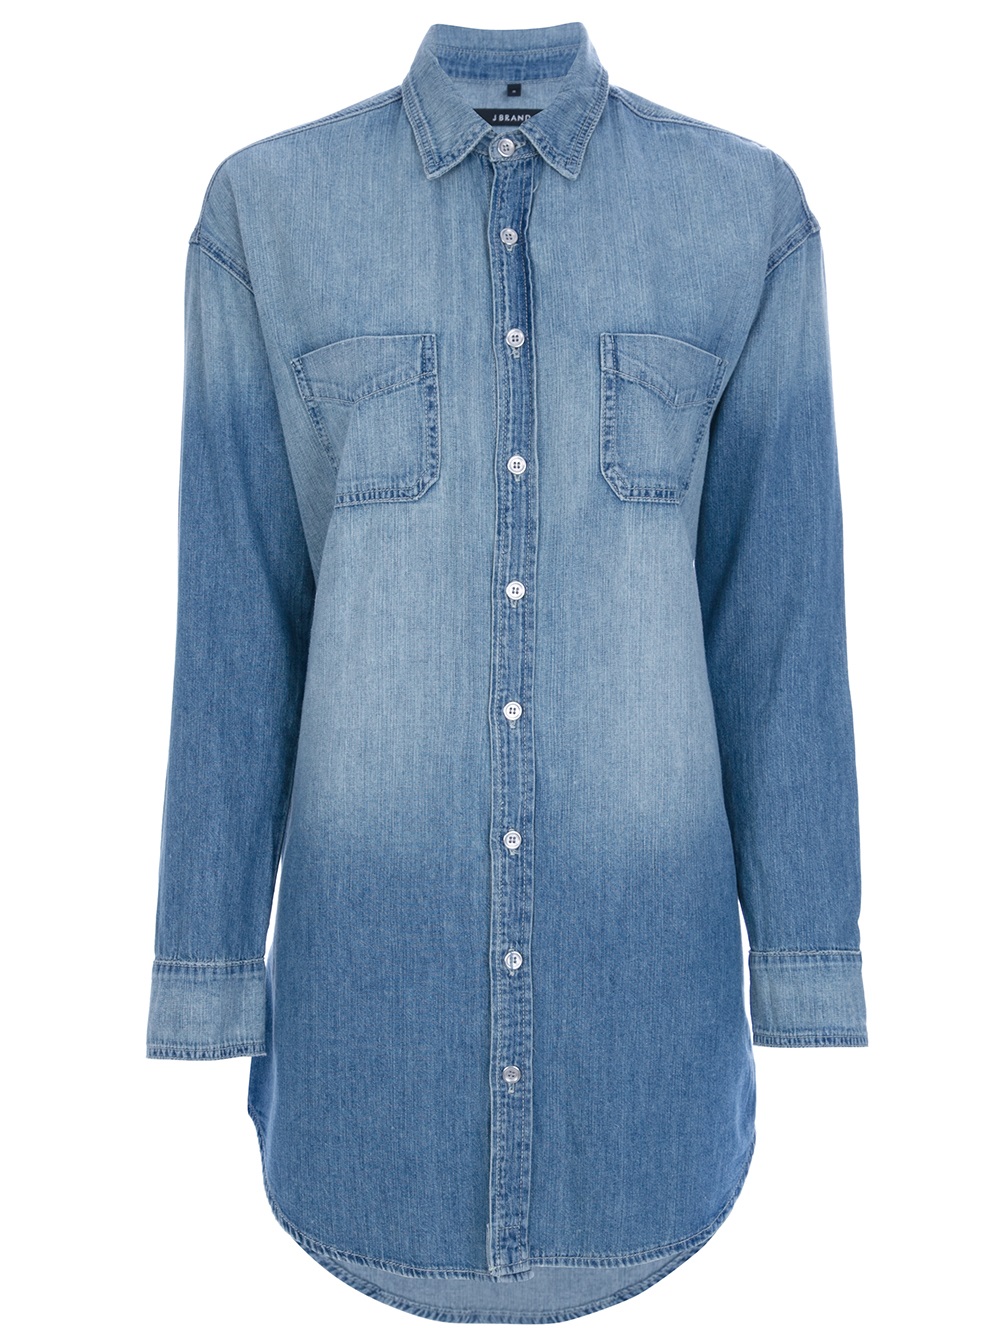 Lyst - J Brand Faded Denim Shirt in Blue